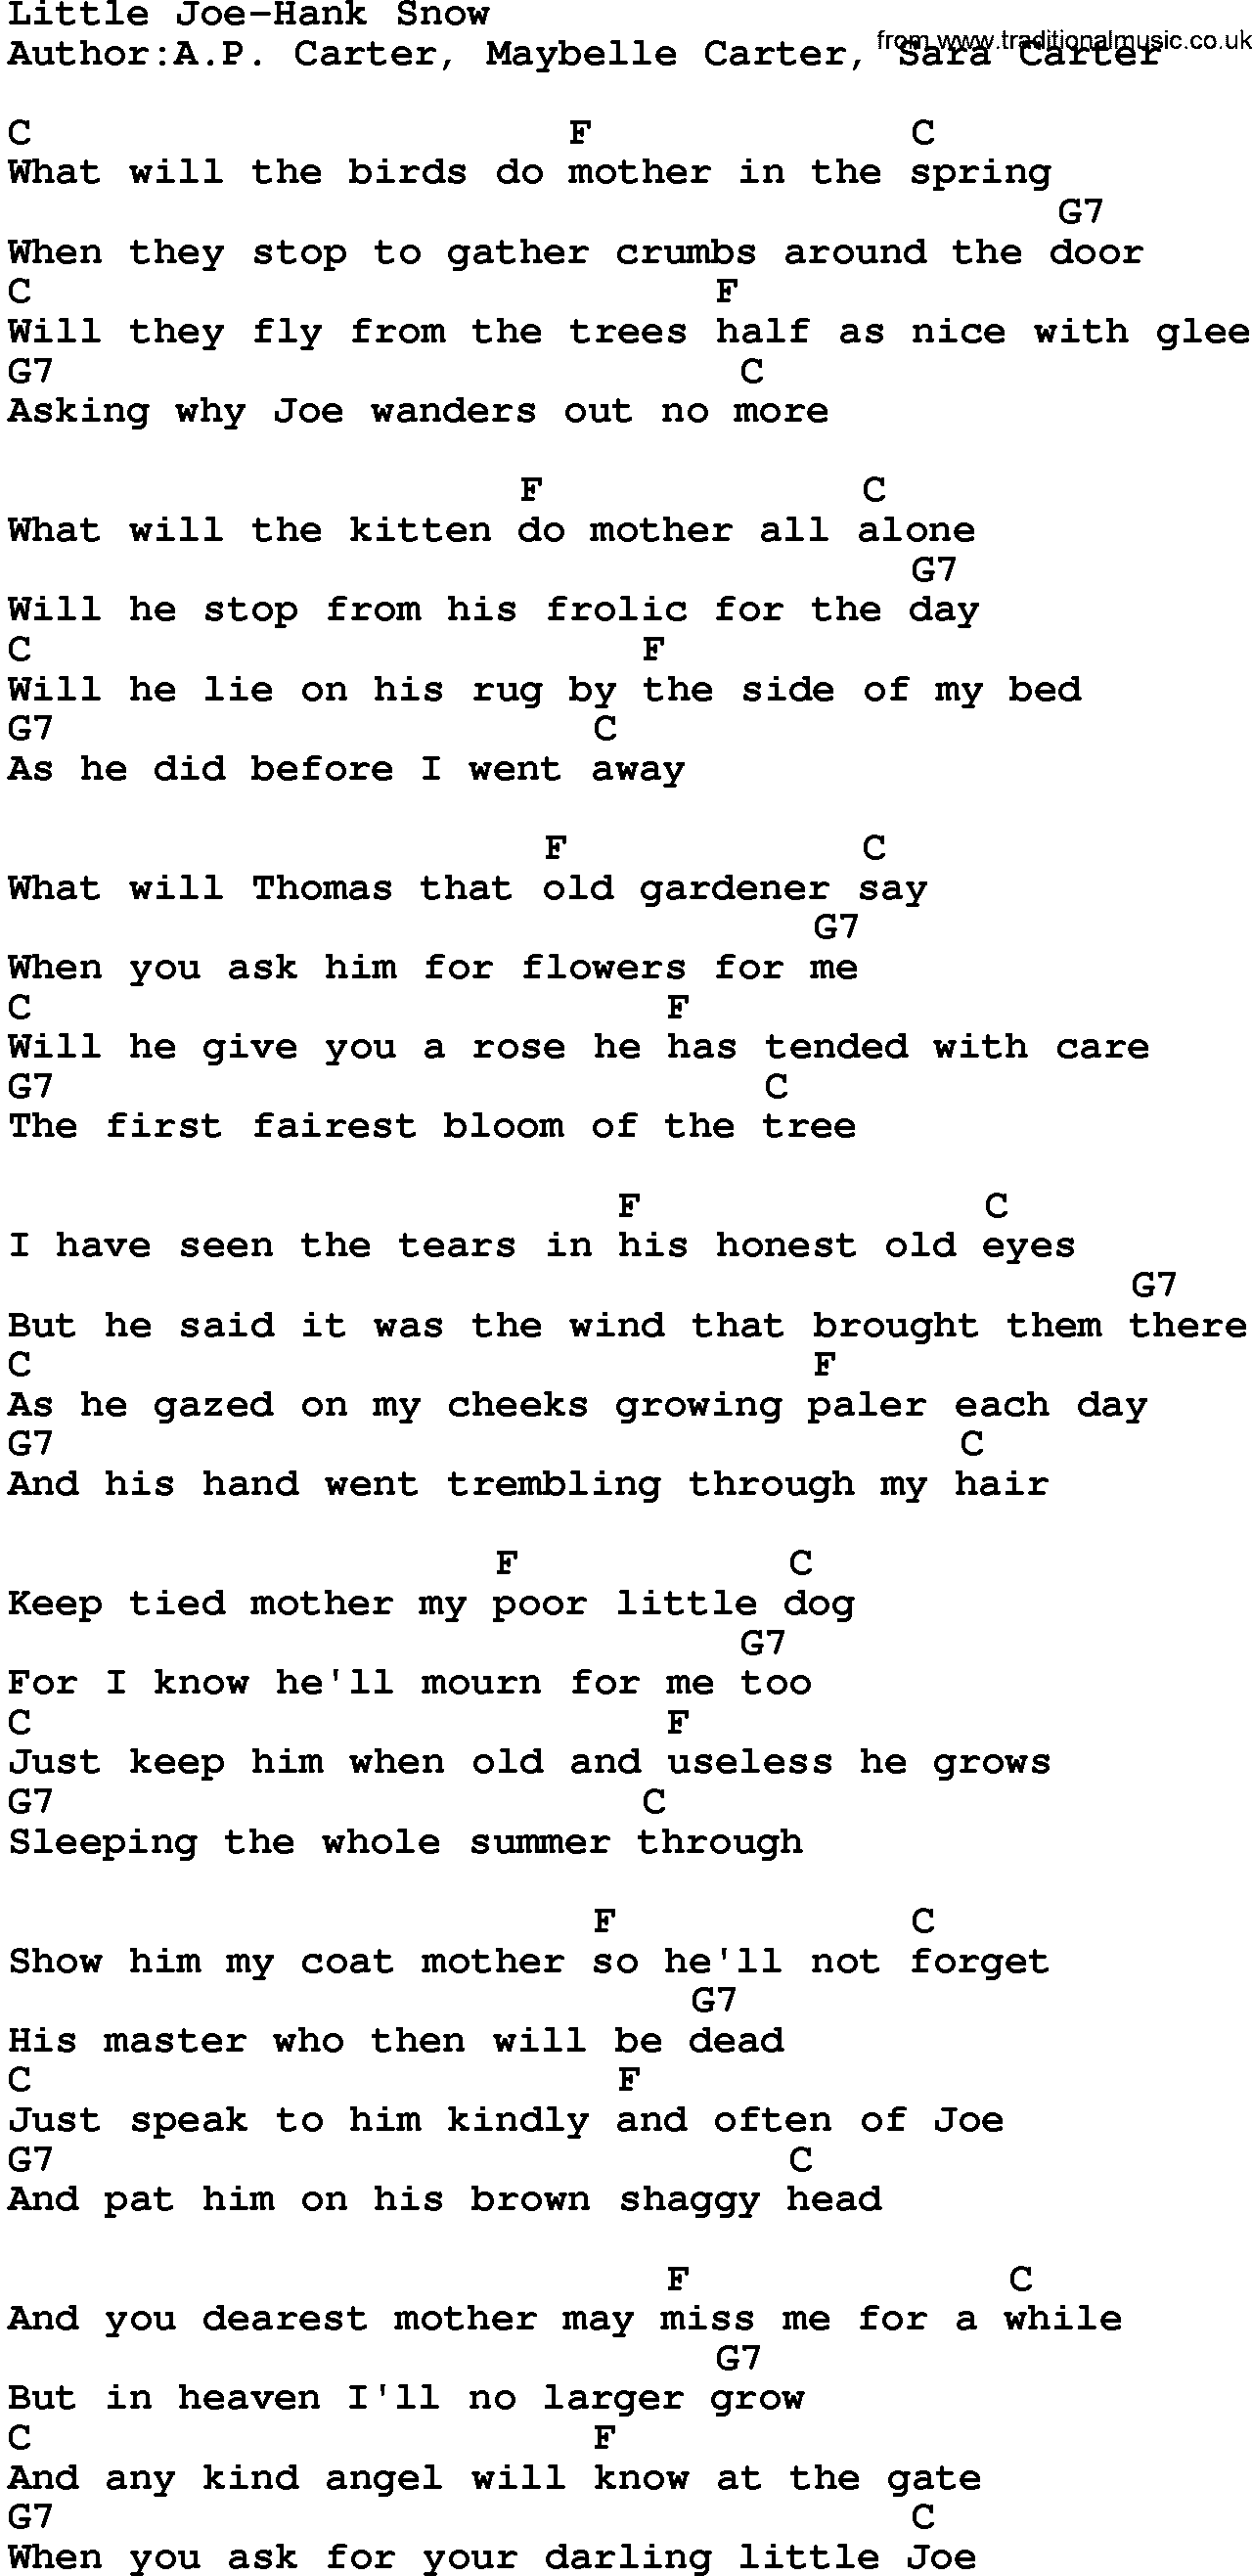 Country music song: Little Joe-Hank Snow lyrics and chords